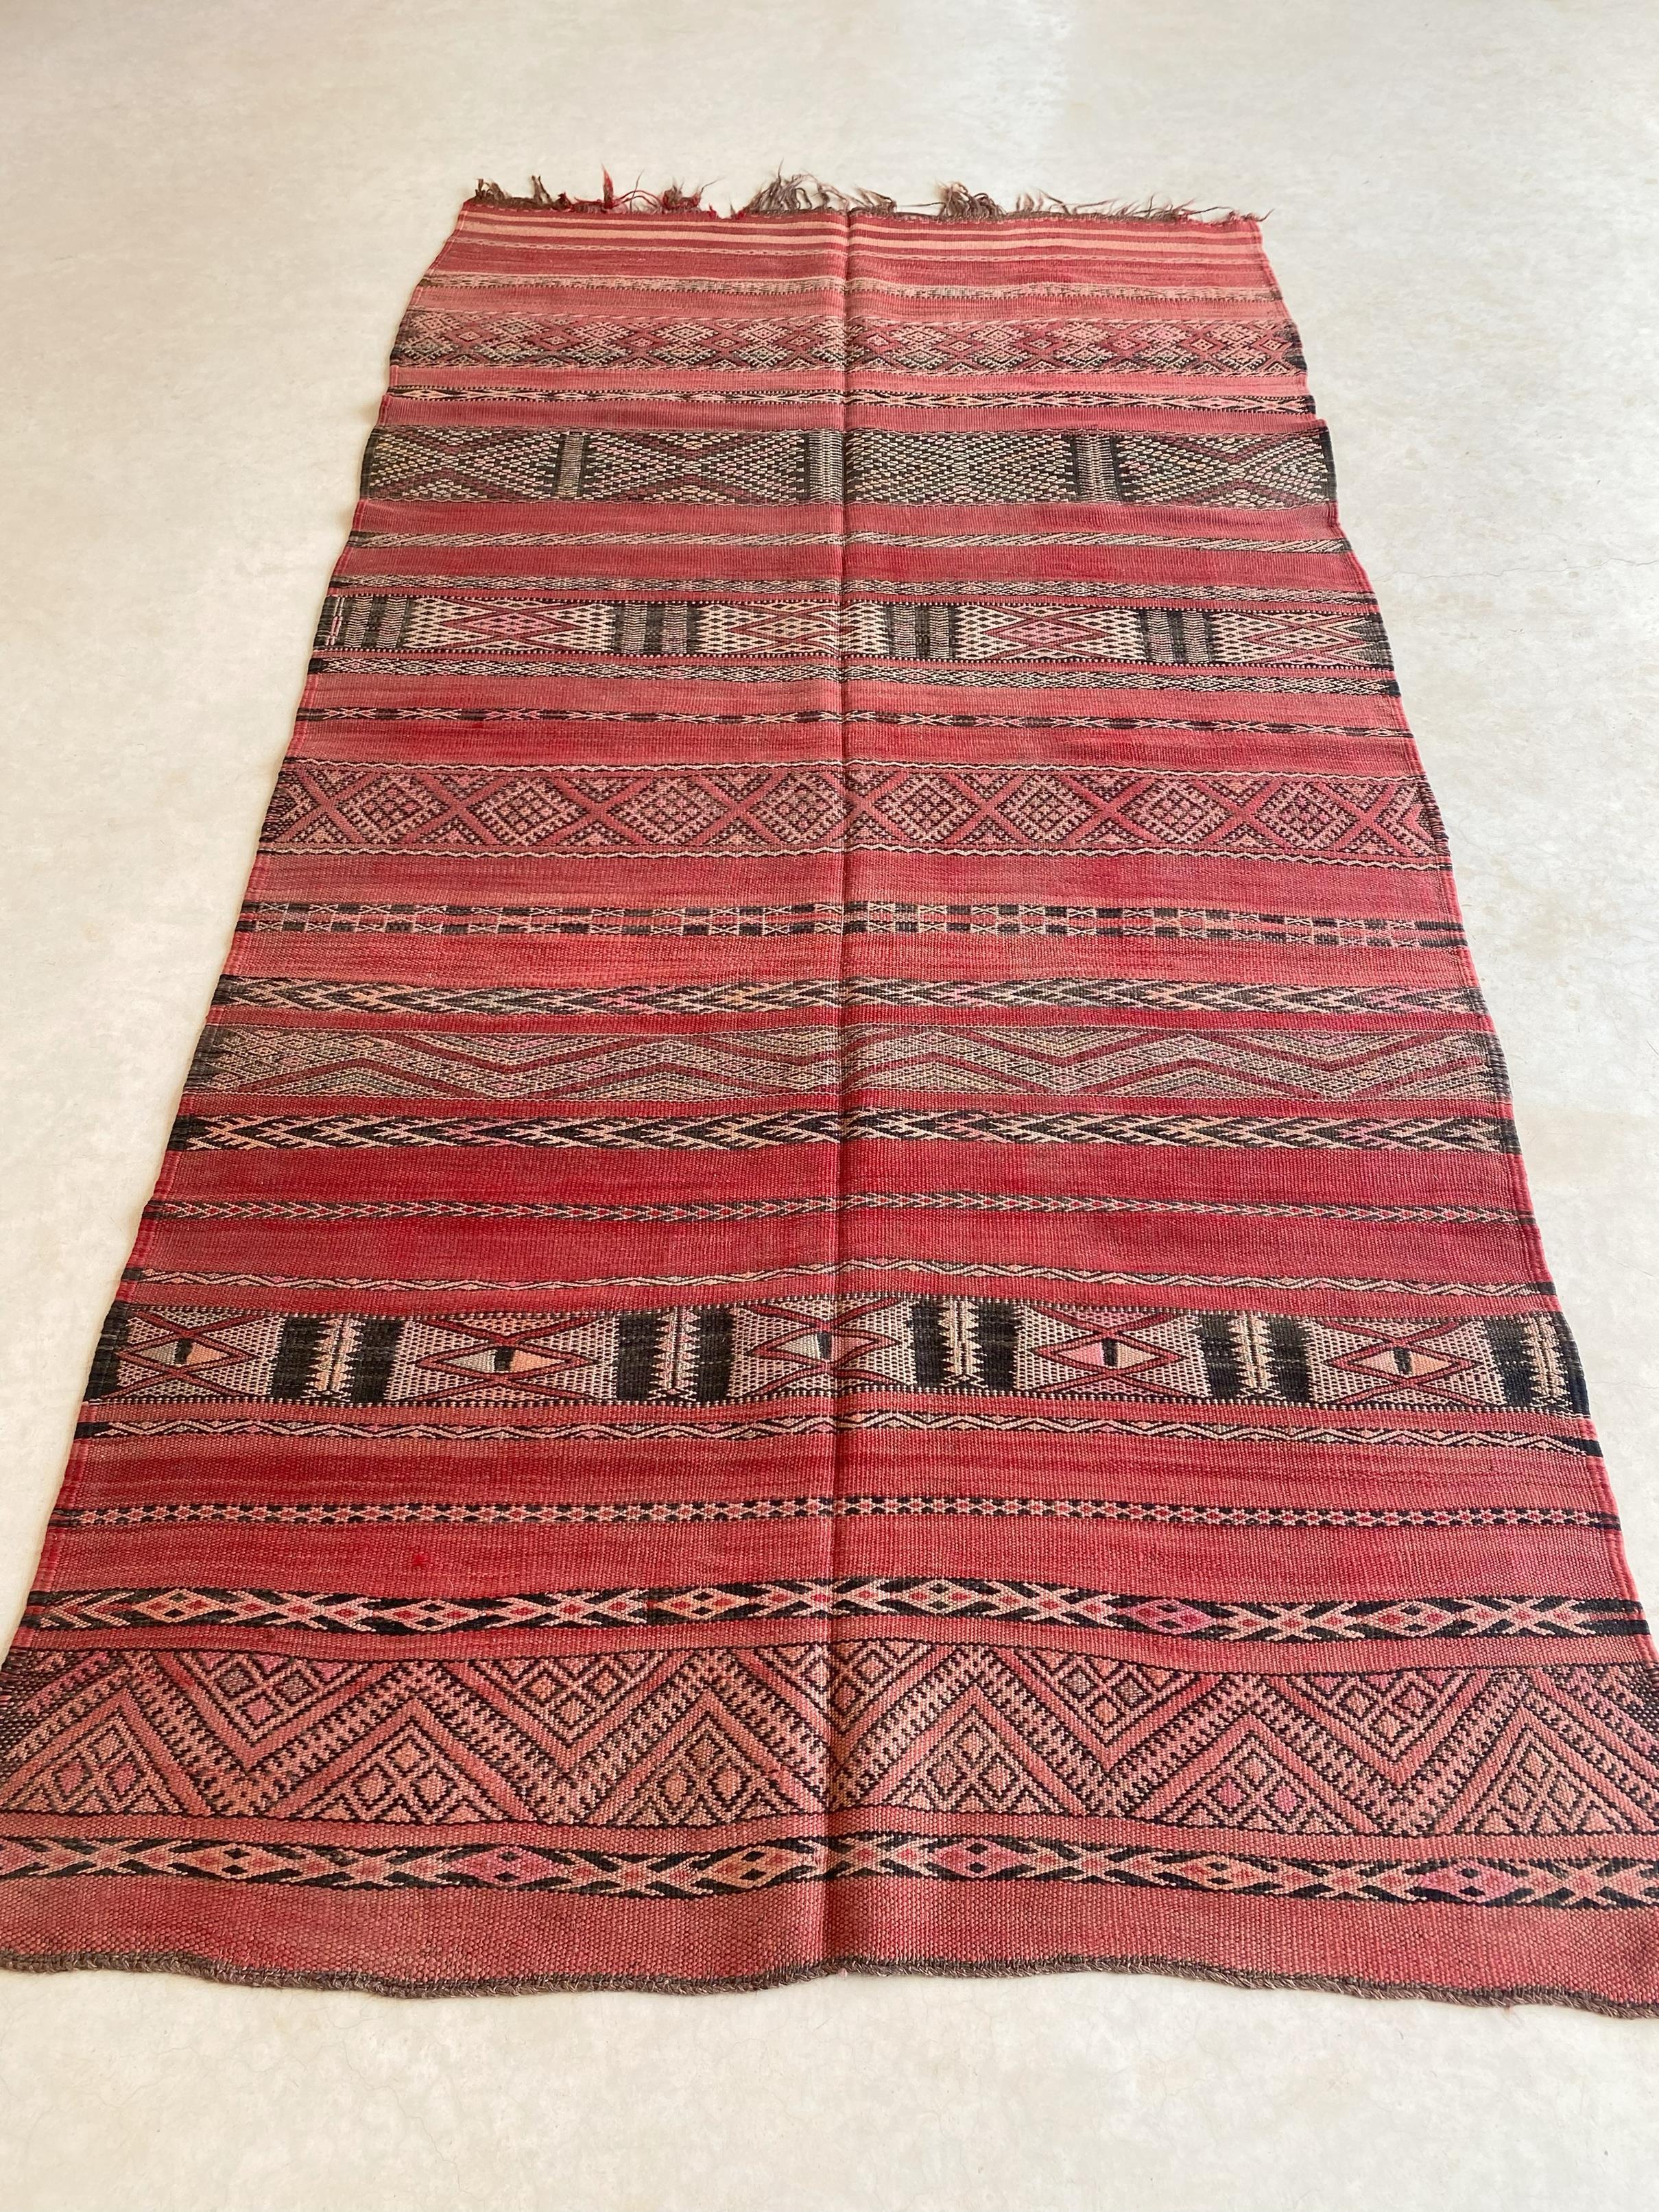 Wool Vintage Moroccan Kilim rug - Red - 5x9.2feet / 152x282cm For Sale